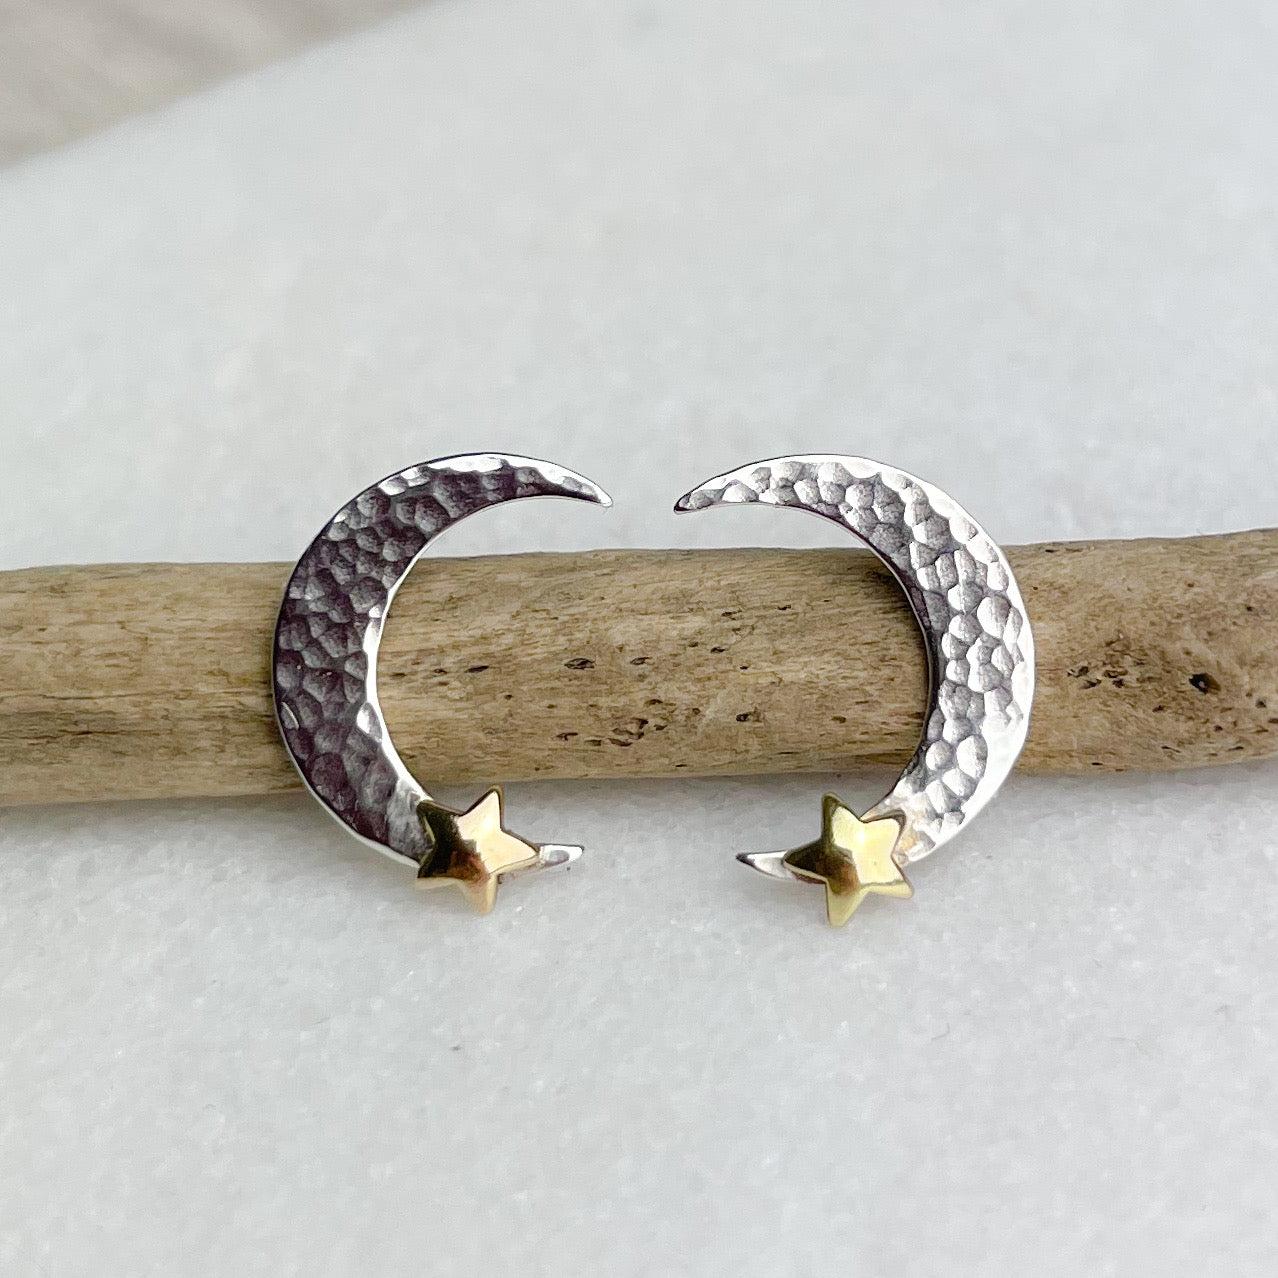 Moon & Star Stud Earrings - The Nancy Smillie Shop - Art, Jewellery & Designer Gifts Glasgow